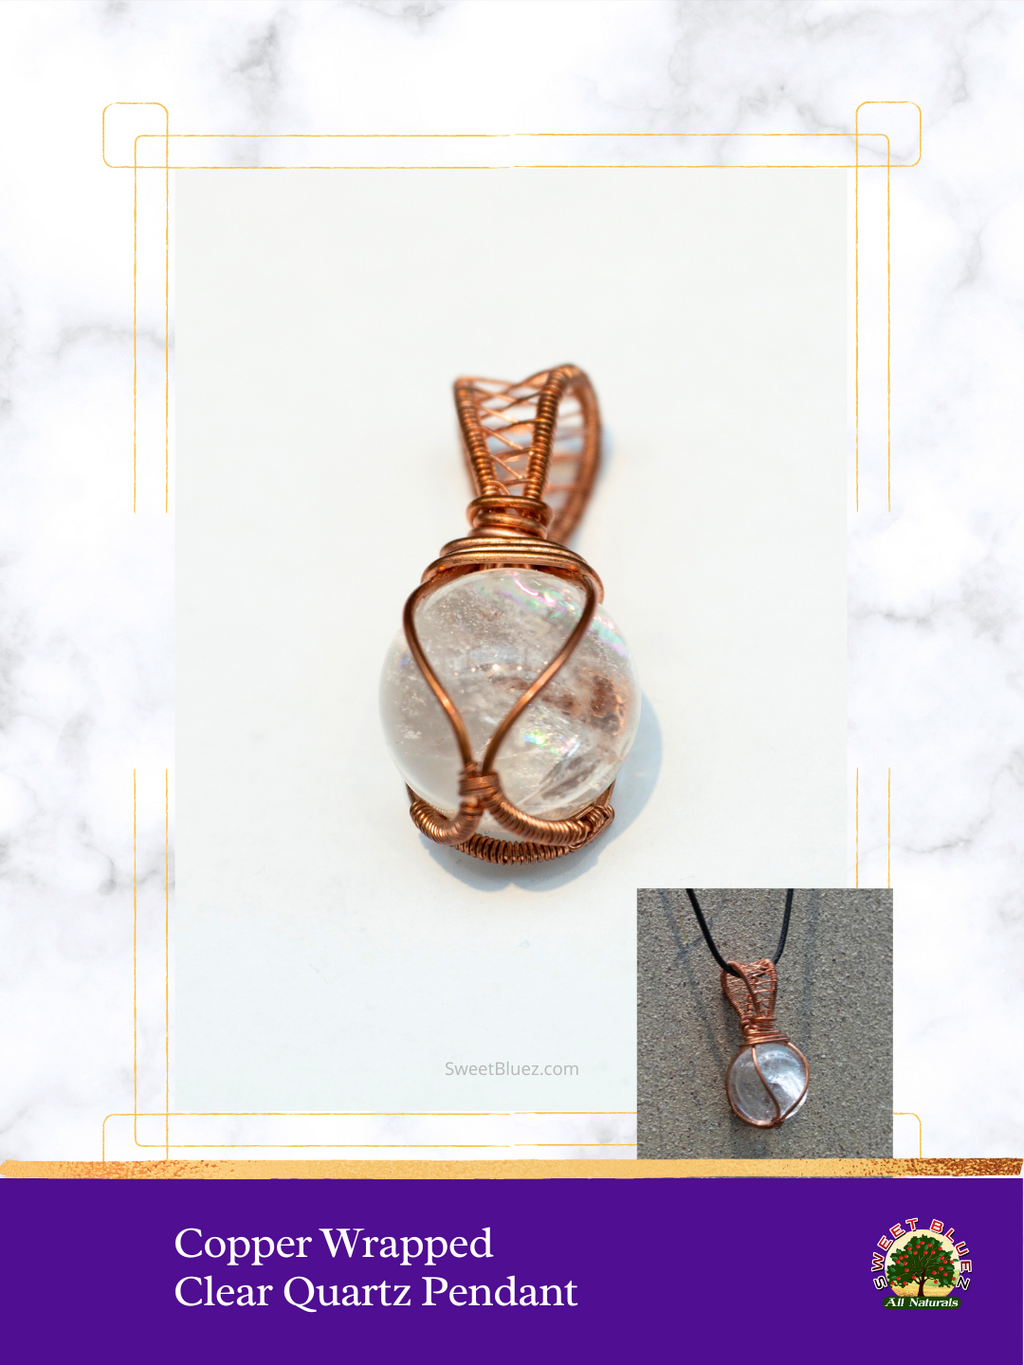 Copper jewelry, crystal jewelry, clear quartz, benefits of copper, handmade jewelry